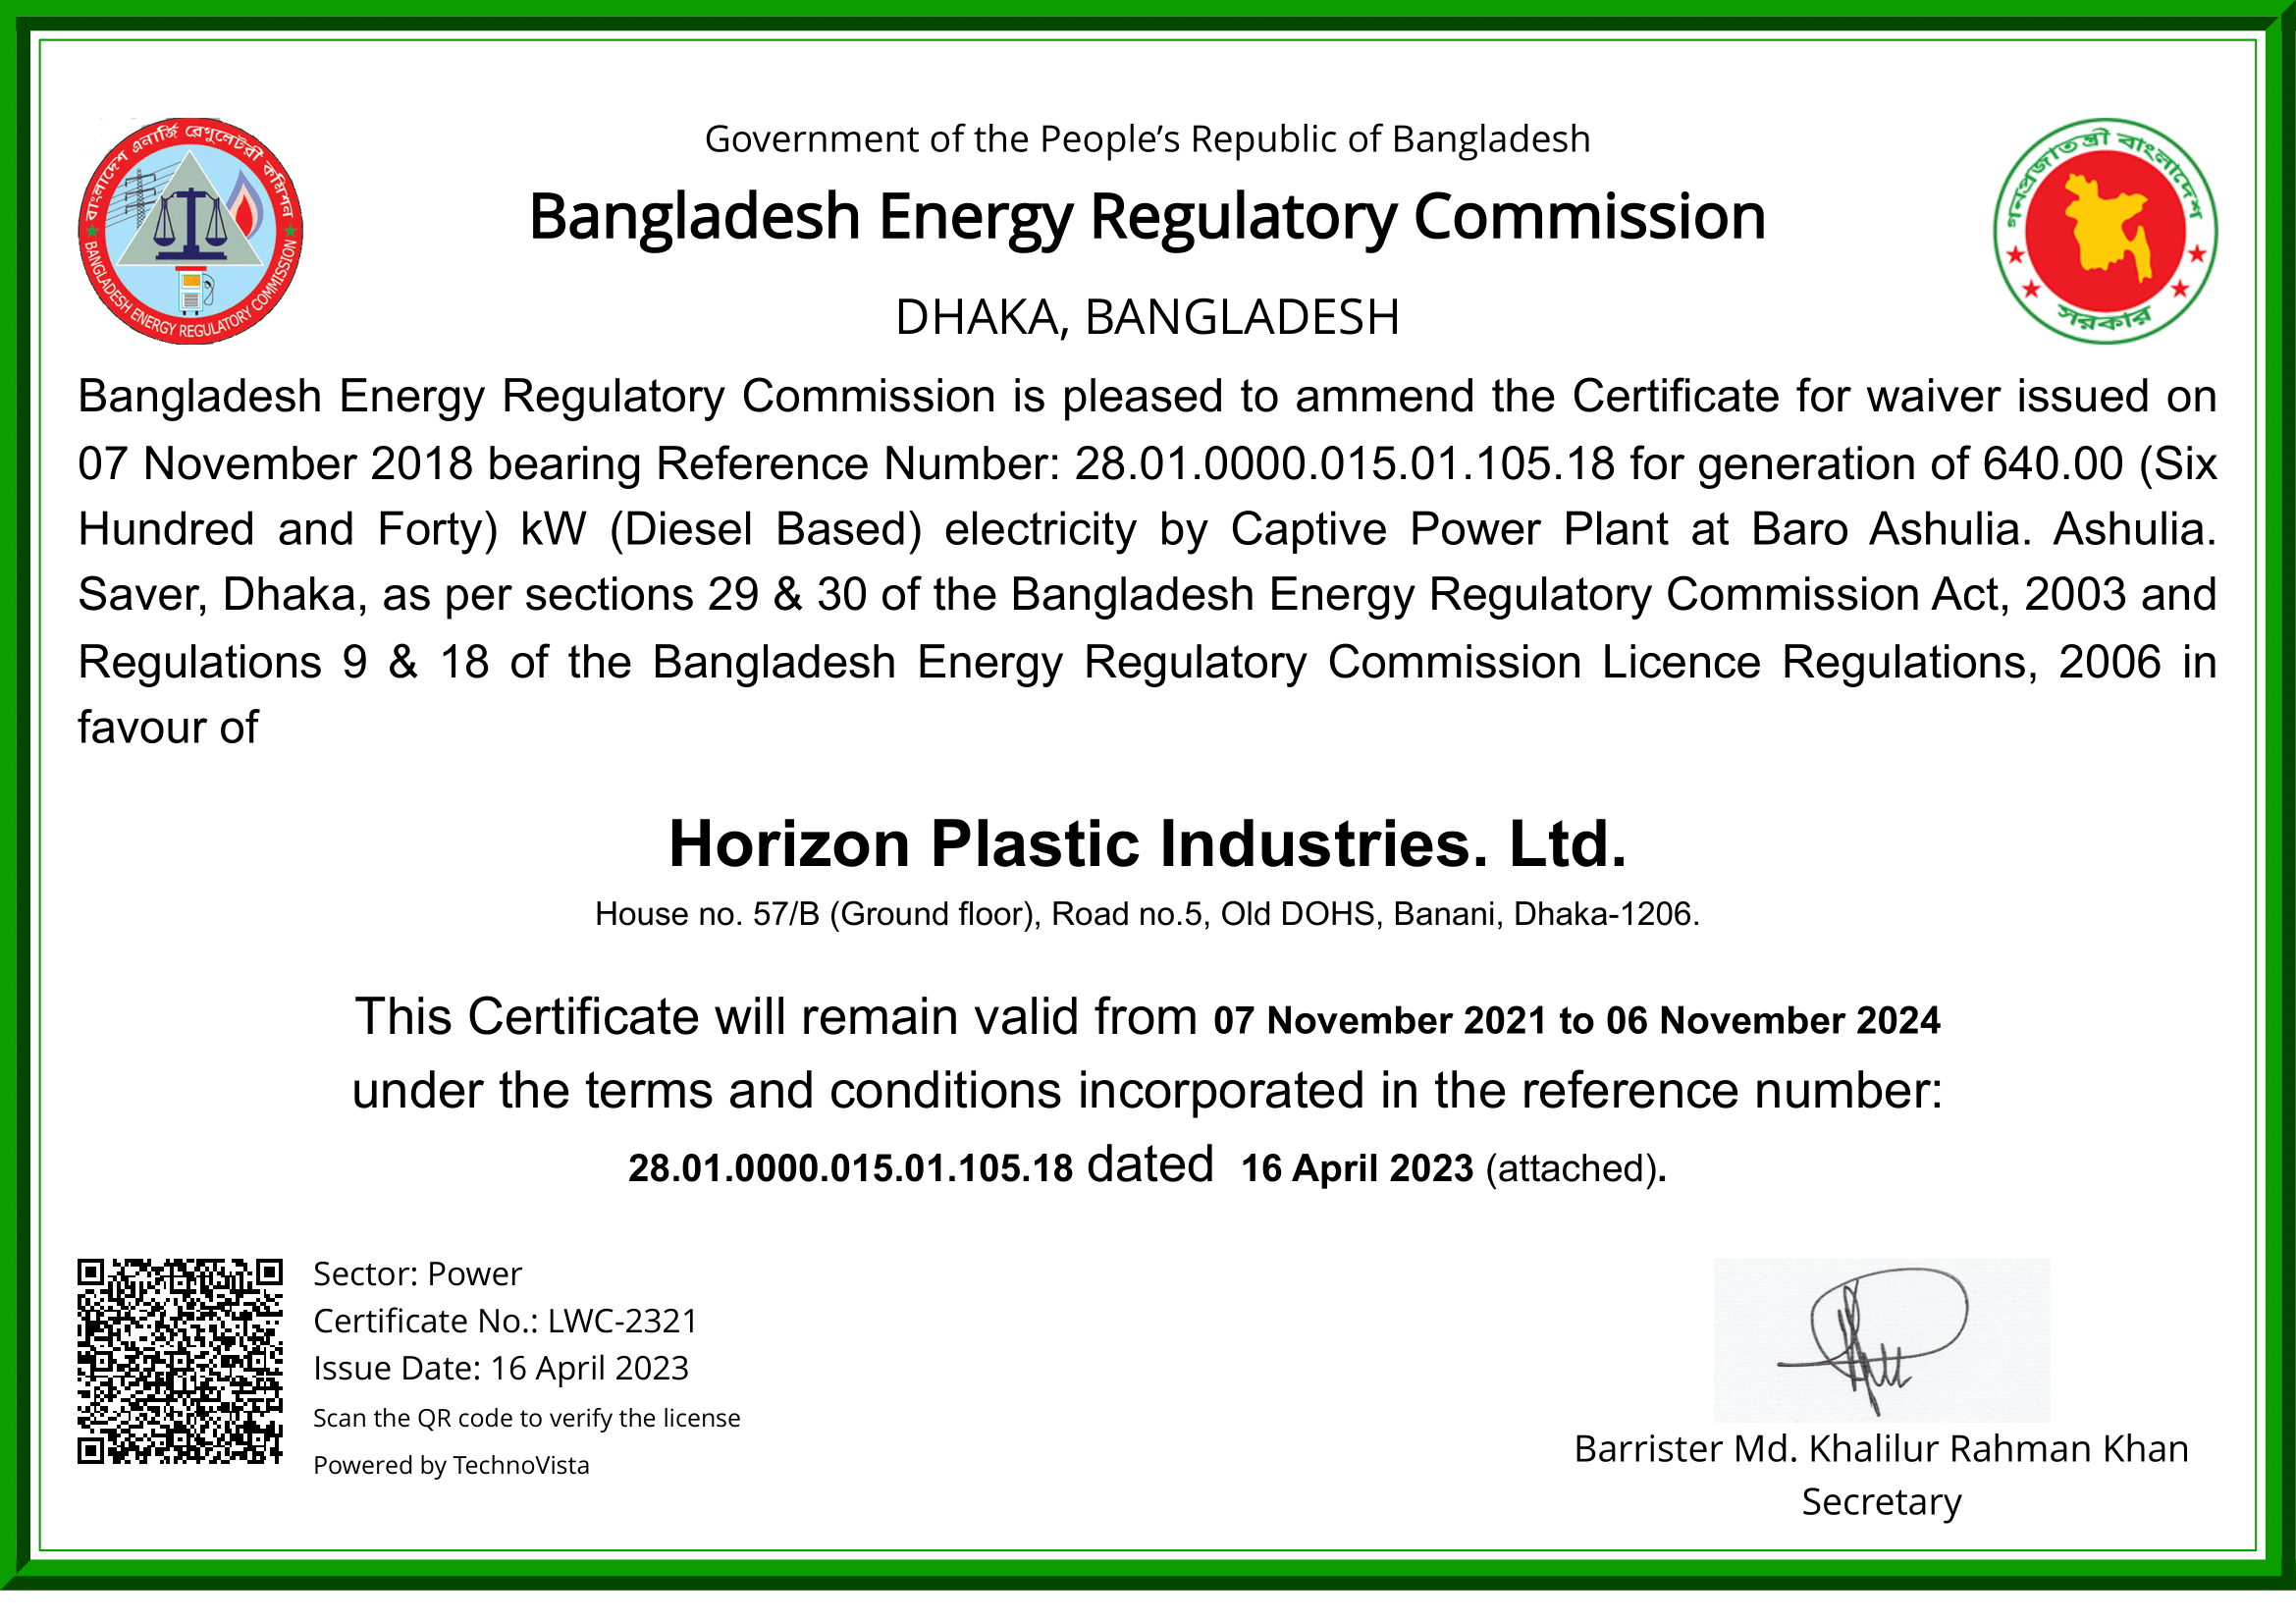 BERC Certificate -Horizon